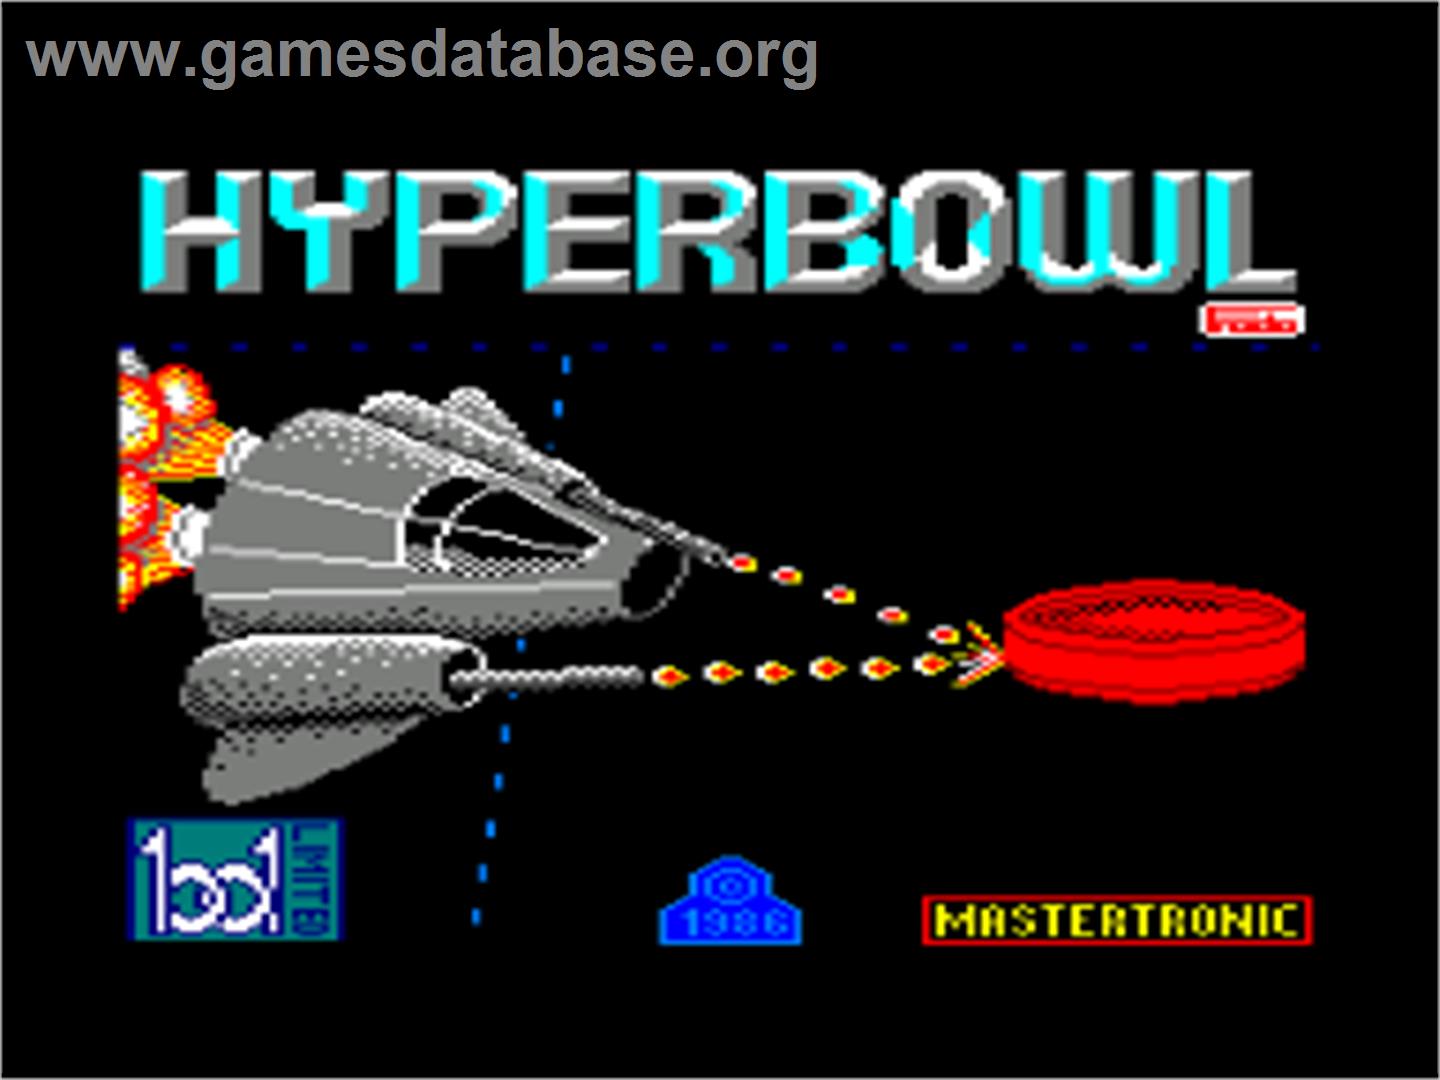 Super Bowl - Amstrad CPC - Artwork - Title Screen